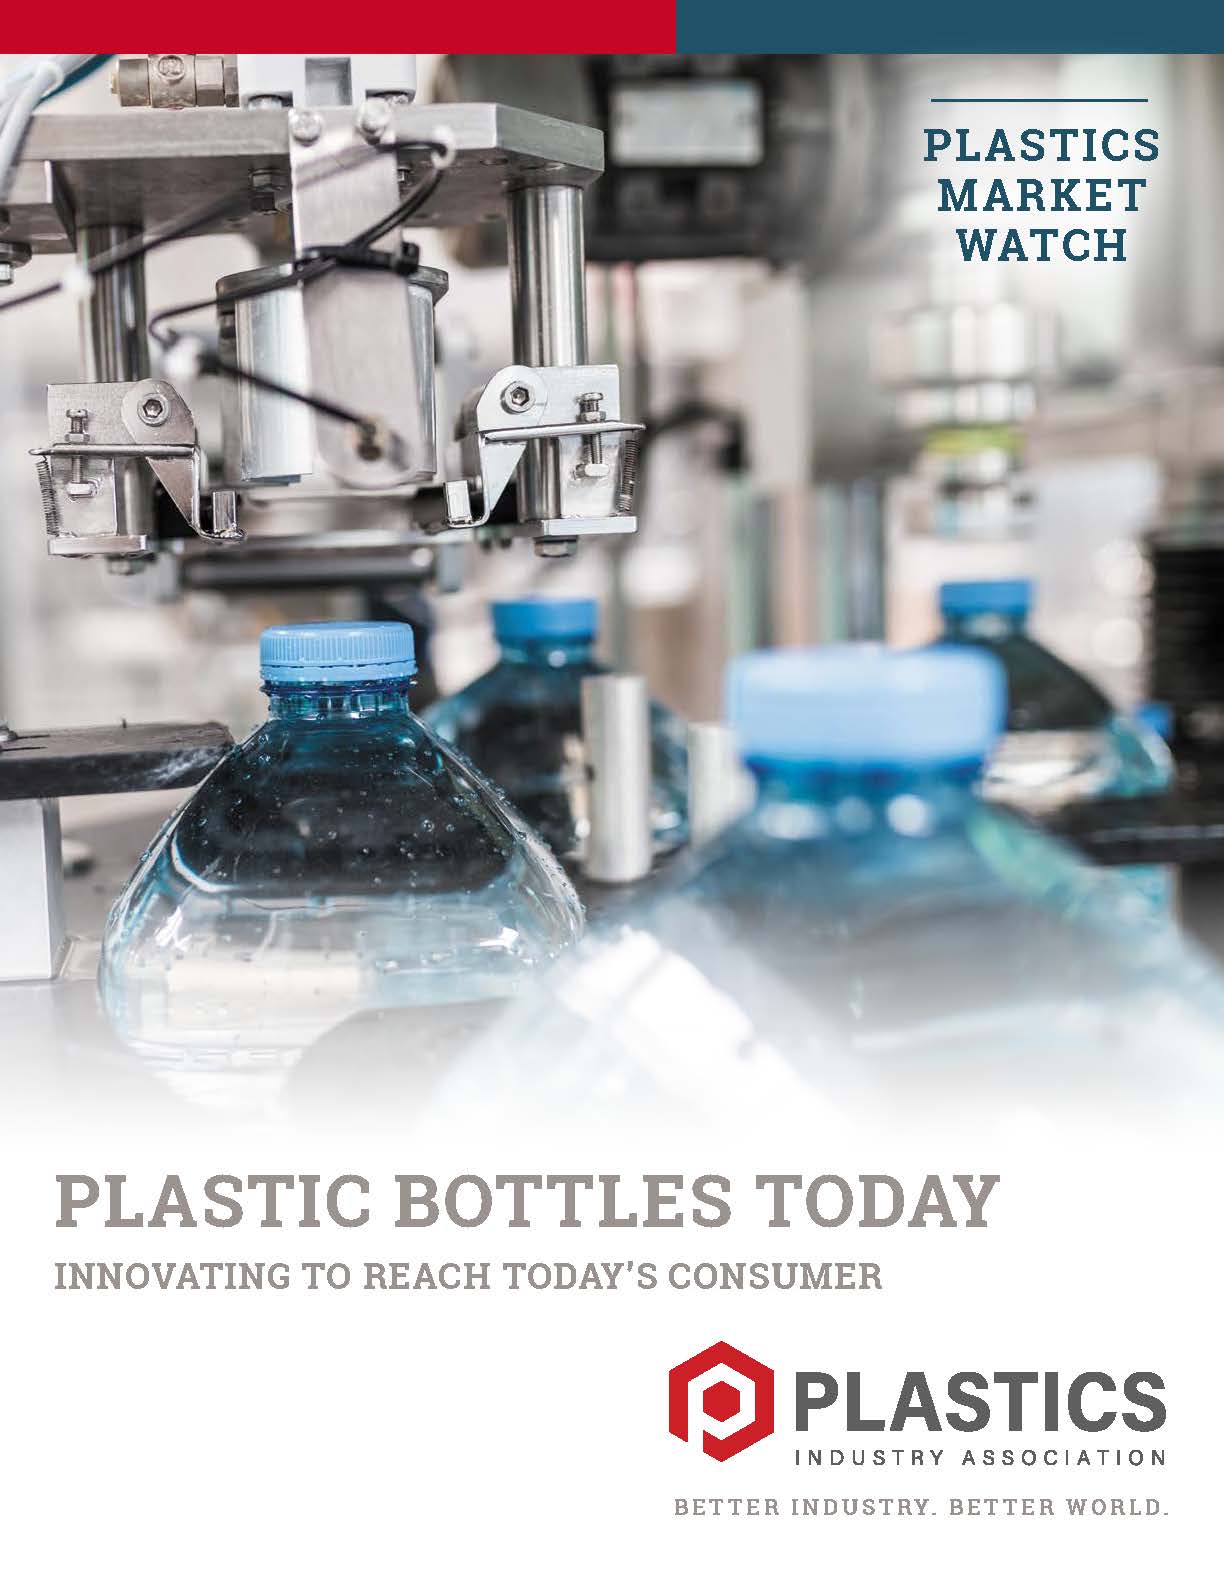 Bottling Plastics Market Watch